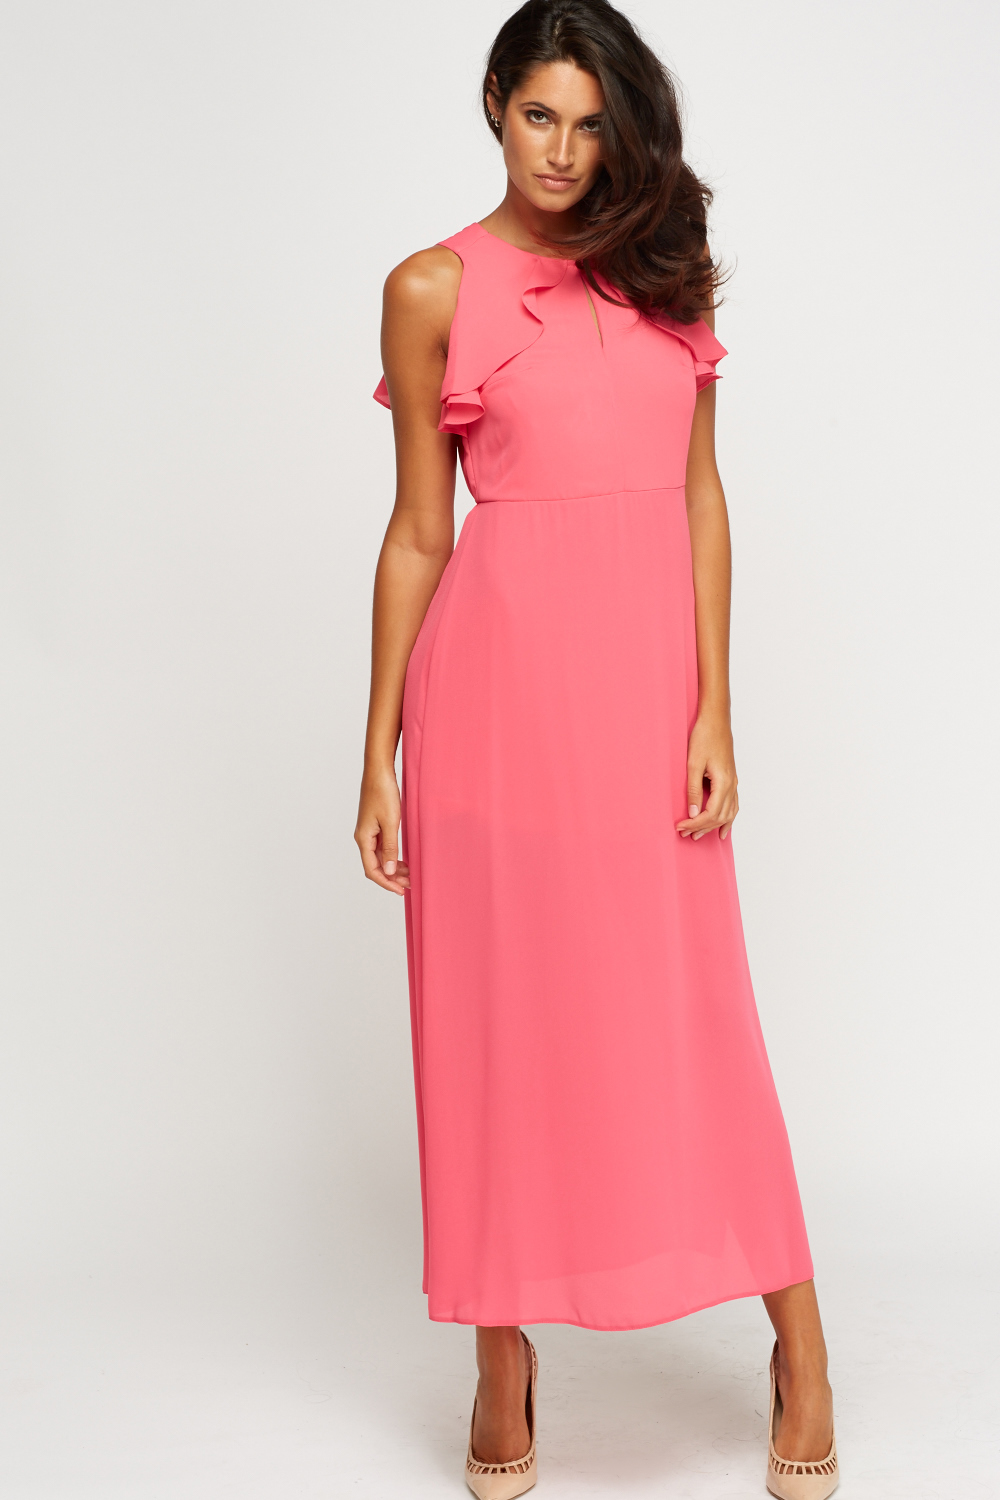 Hot Pink Ruffled Maxi Dress - Just $6